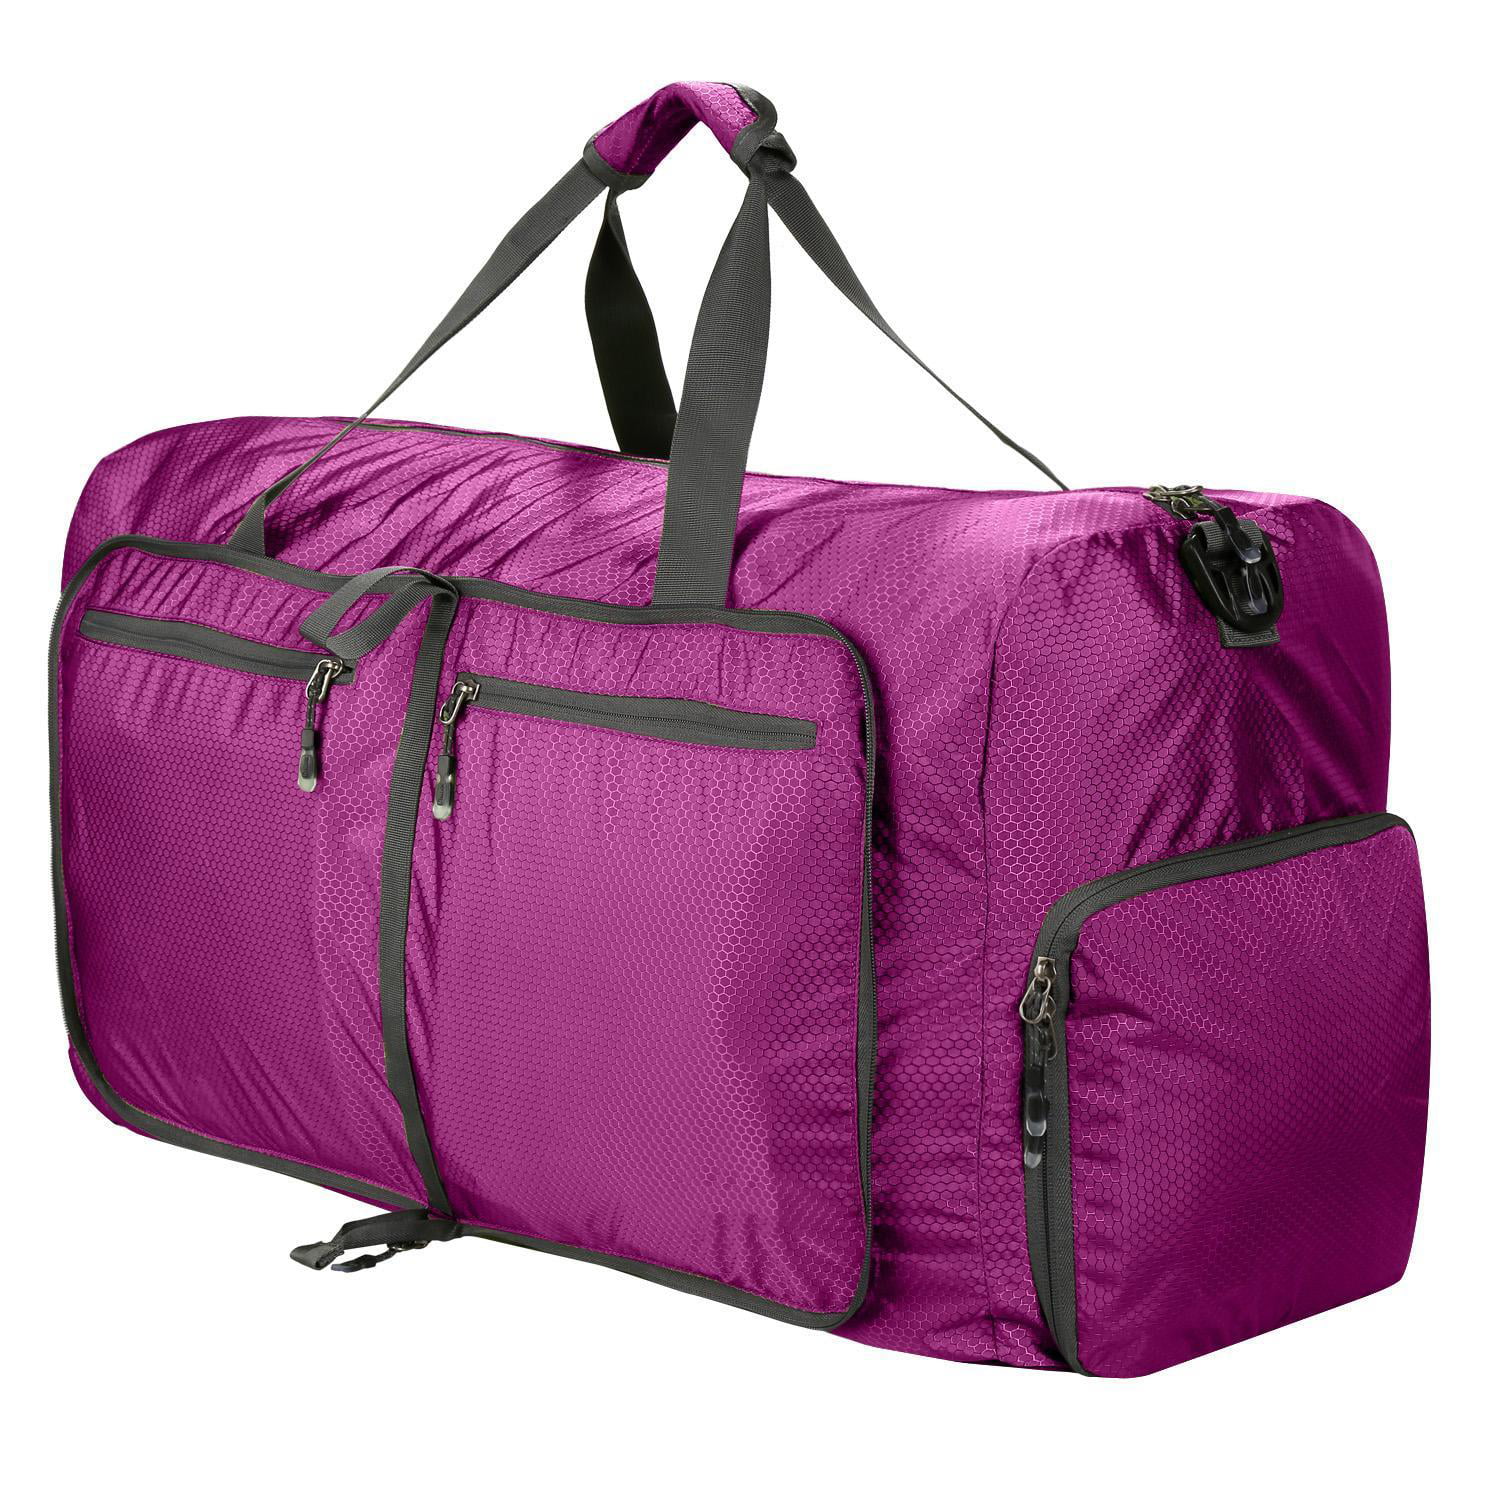 80L Camping Duffel Bag Large Size,Packable Travel Duffle Bags for Men and Women,Waterproof ...